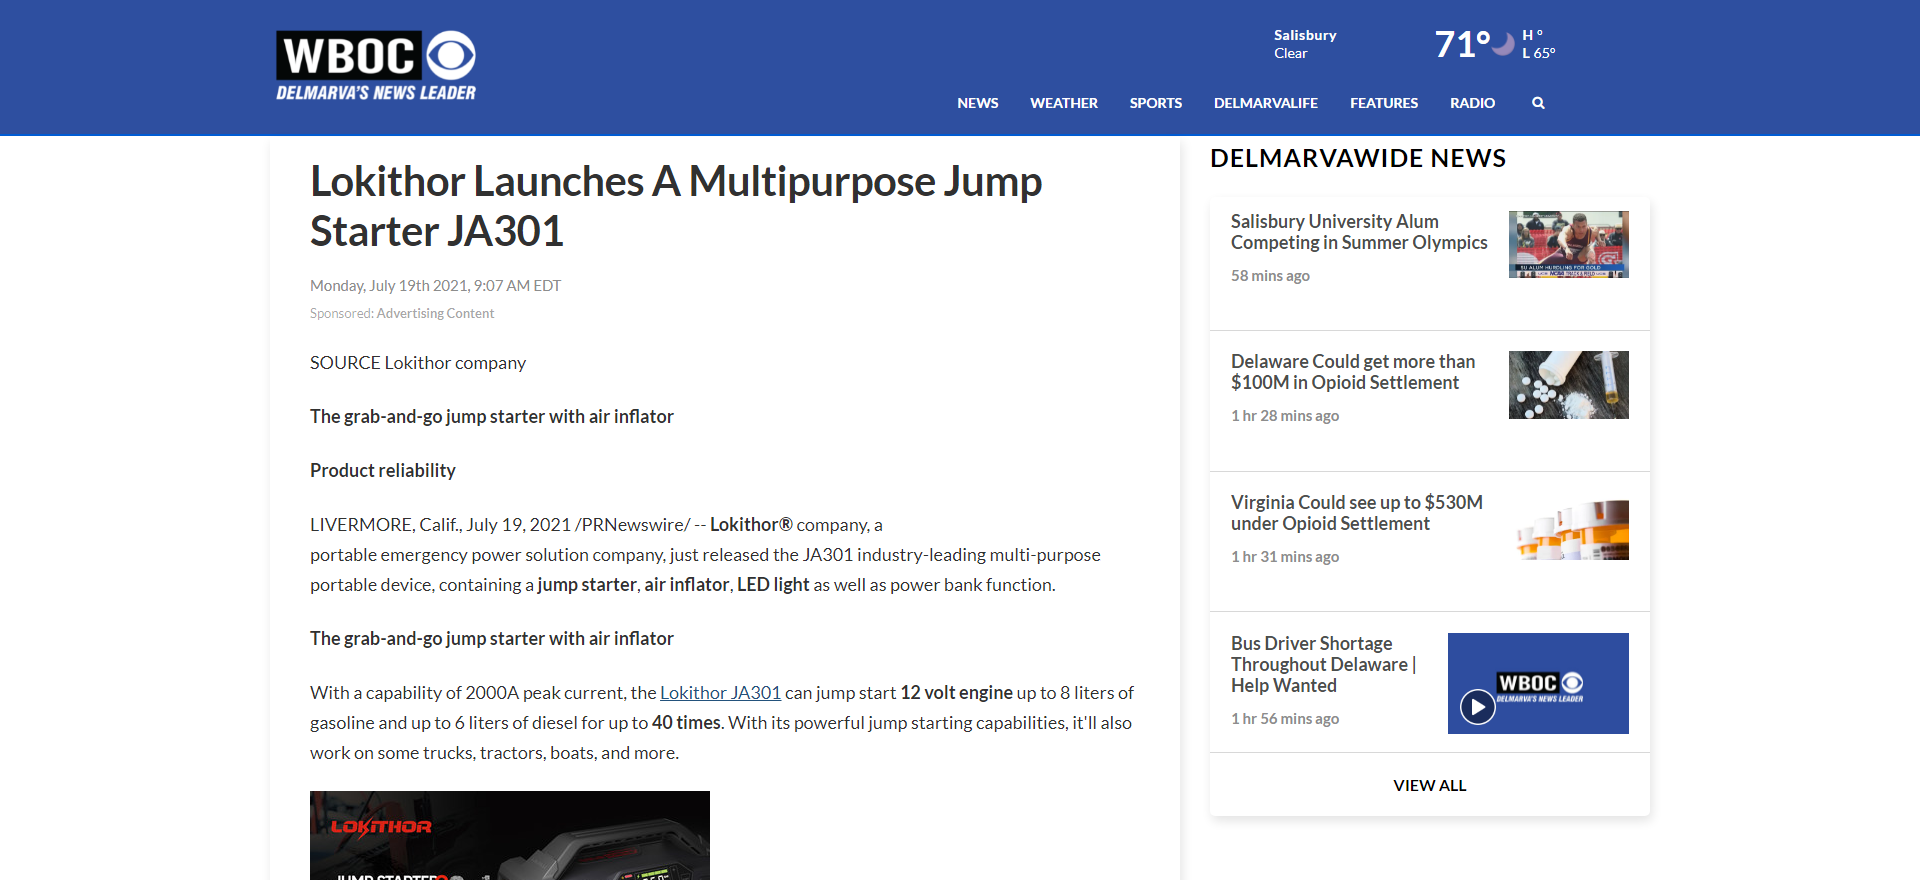 Lokithor Launches A Multipurpose Jump Starter JA301 - WBOC TV - www.wboc.com